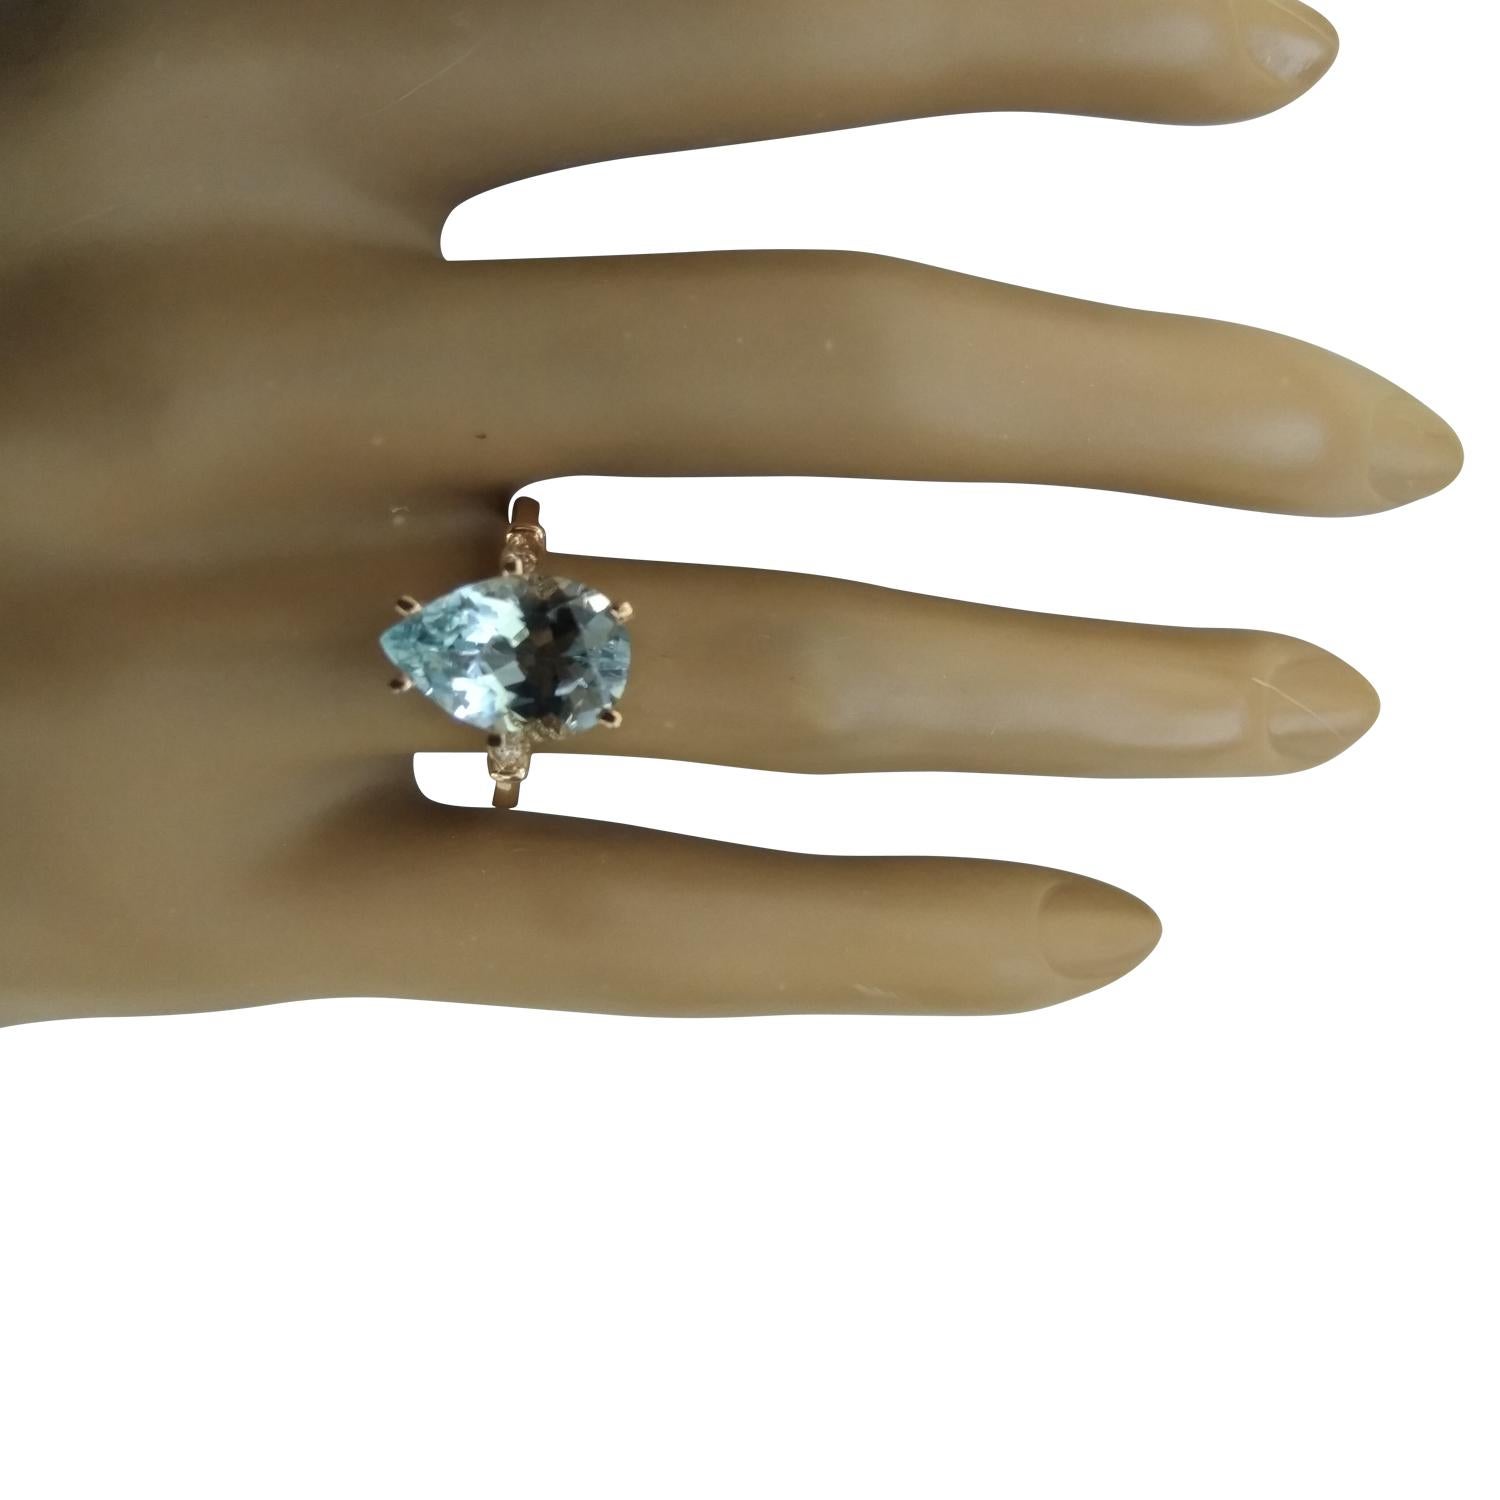 3.60 Carat Natural Aquamarine 14 Karat Solid Rose Gold Diamond Ring
Stamped: 14K 
Total Ring Weight: 3.9 Grams 
Aquamarine Weight 3.52 Carat (13.00x9.00 Millimeters)
Diamond Weight: 0.08 carat (F-G Color, VS2-SI1 Clarity )
Face Measures: 13.00x9.00